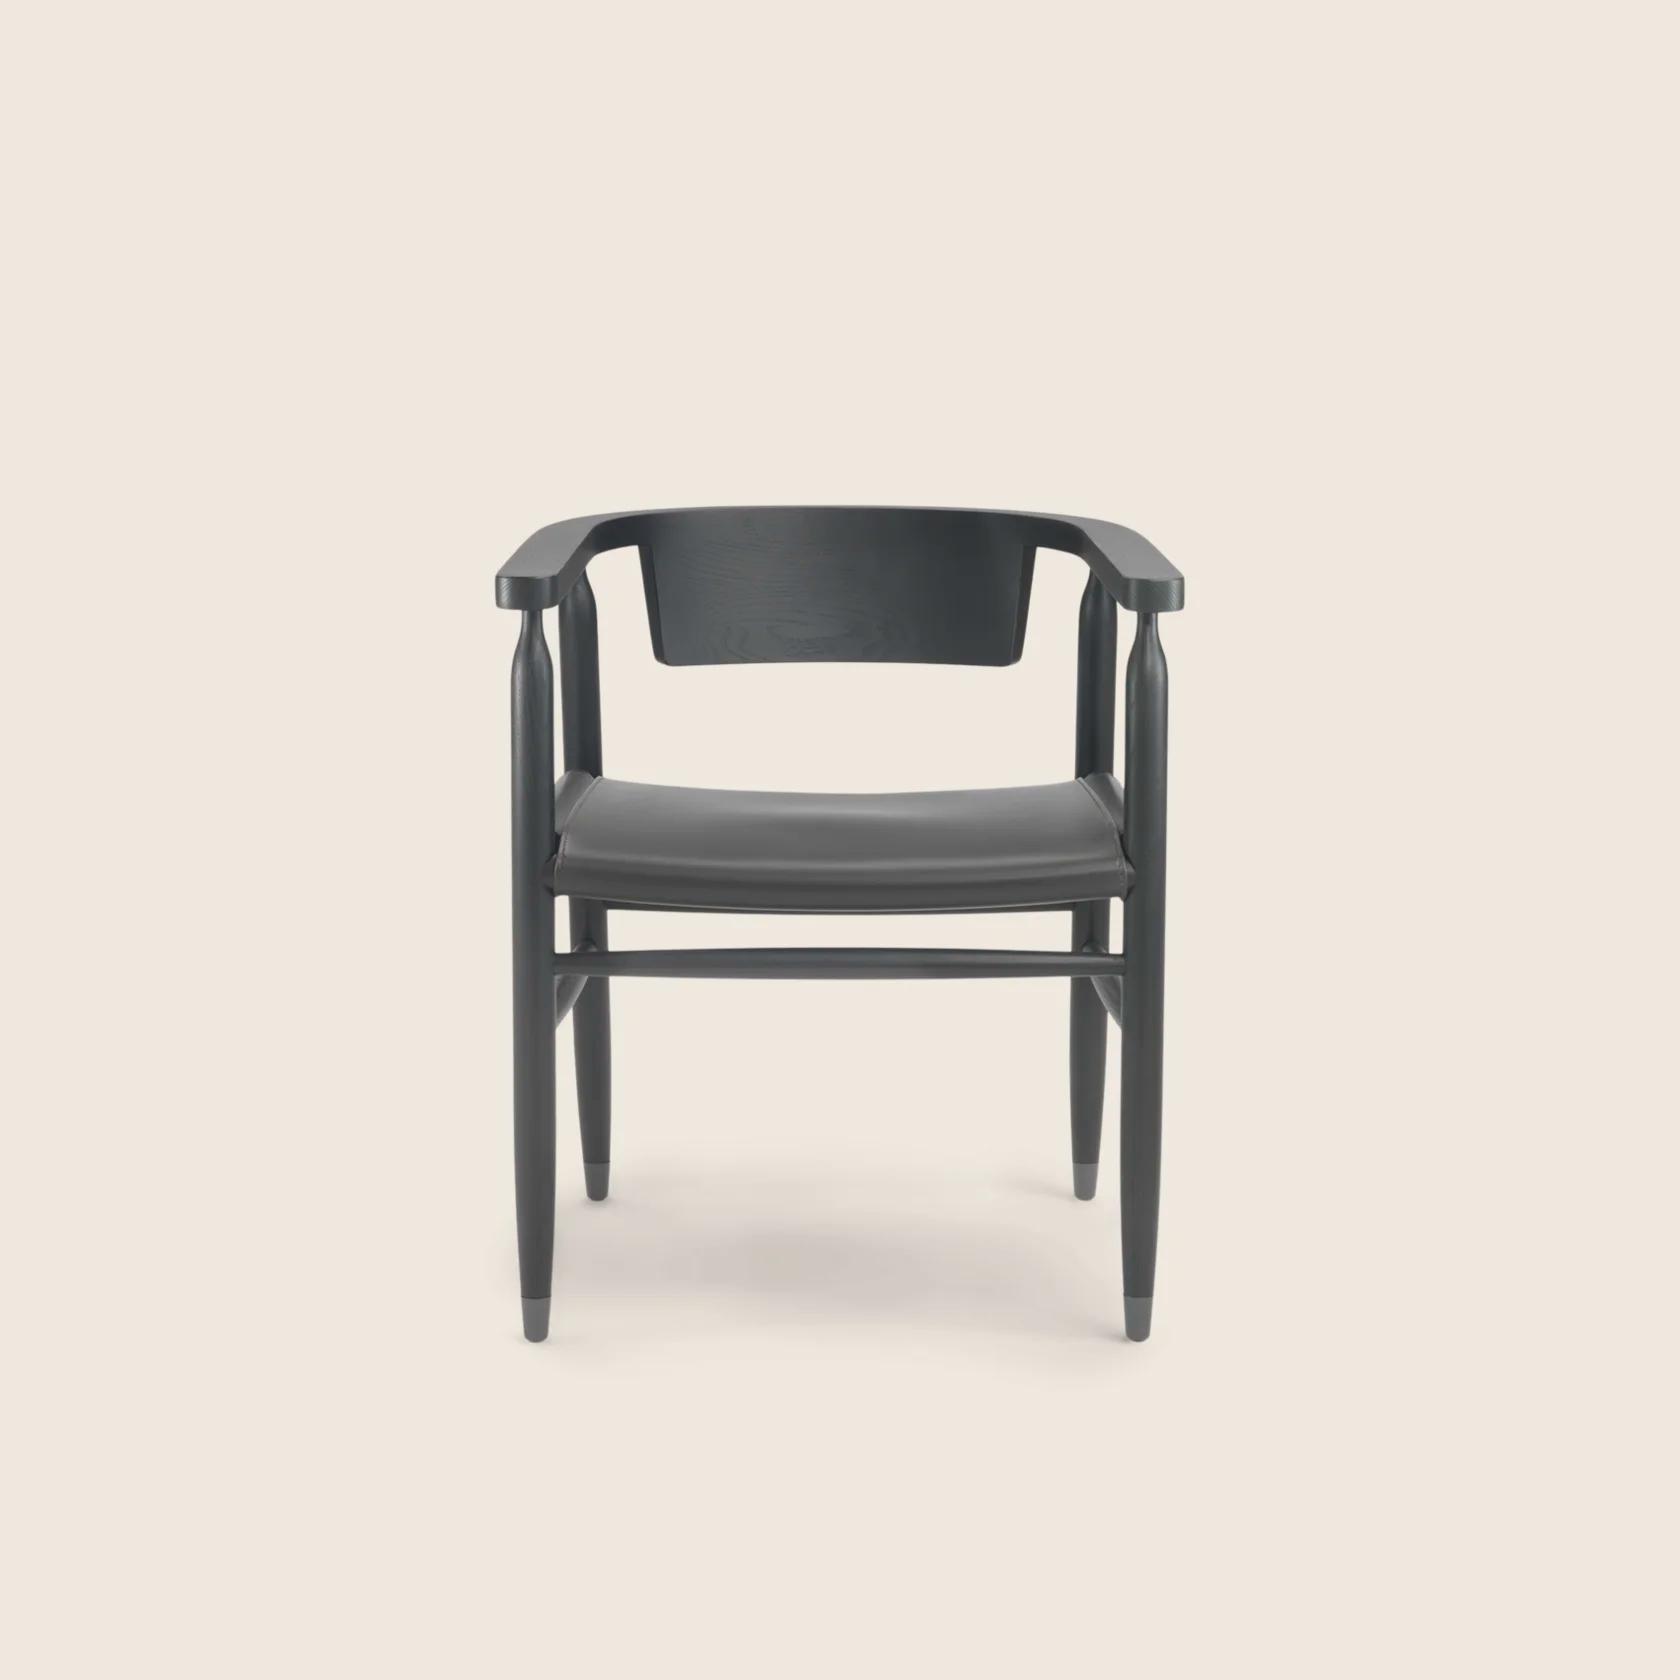 DORIS Italy Made in Flexform | chairs/Chairs S.H. DORIS Dining - Design |